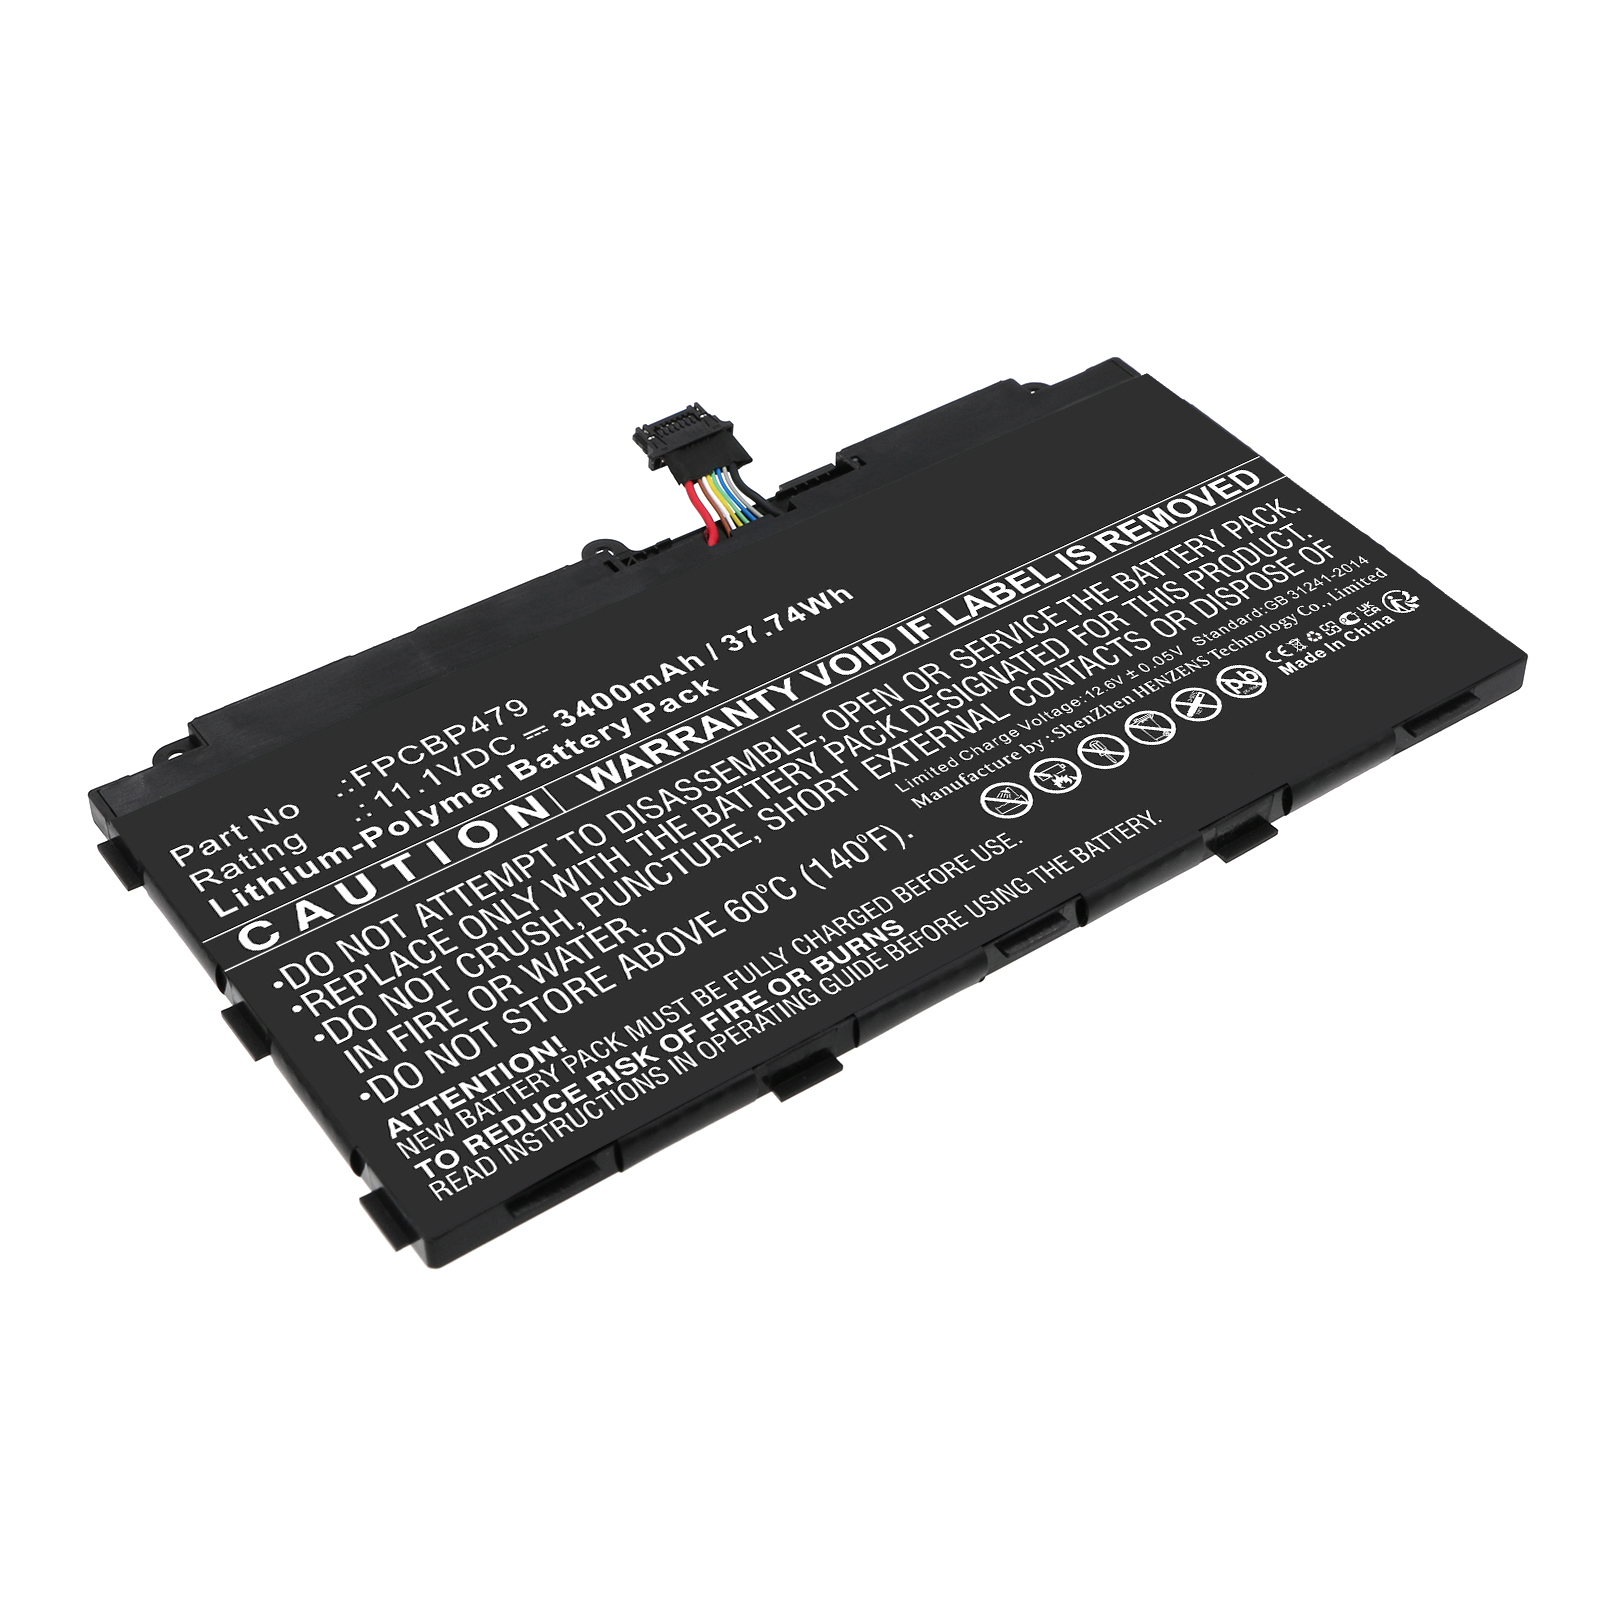 Synergy Digital Laptop Battery, Compatible with Fujitsu CP690859 Laptop Battery (Li-Pol, 11.1V, 3400mAh)